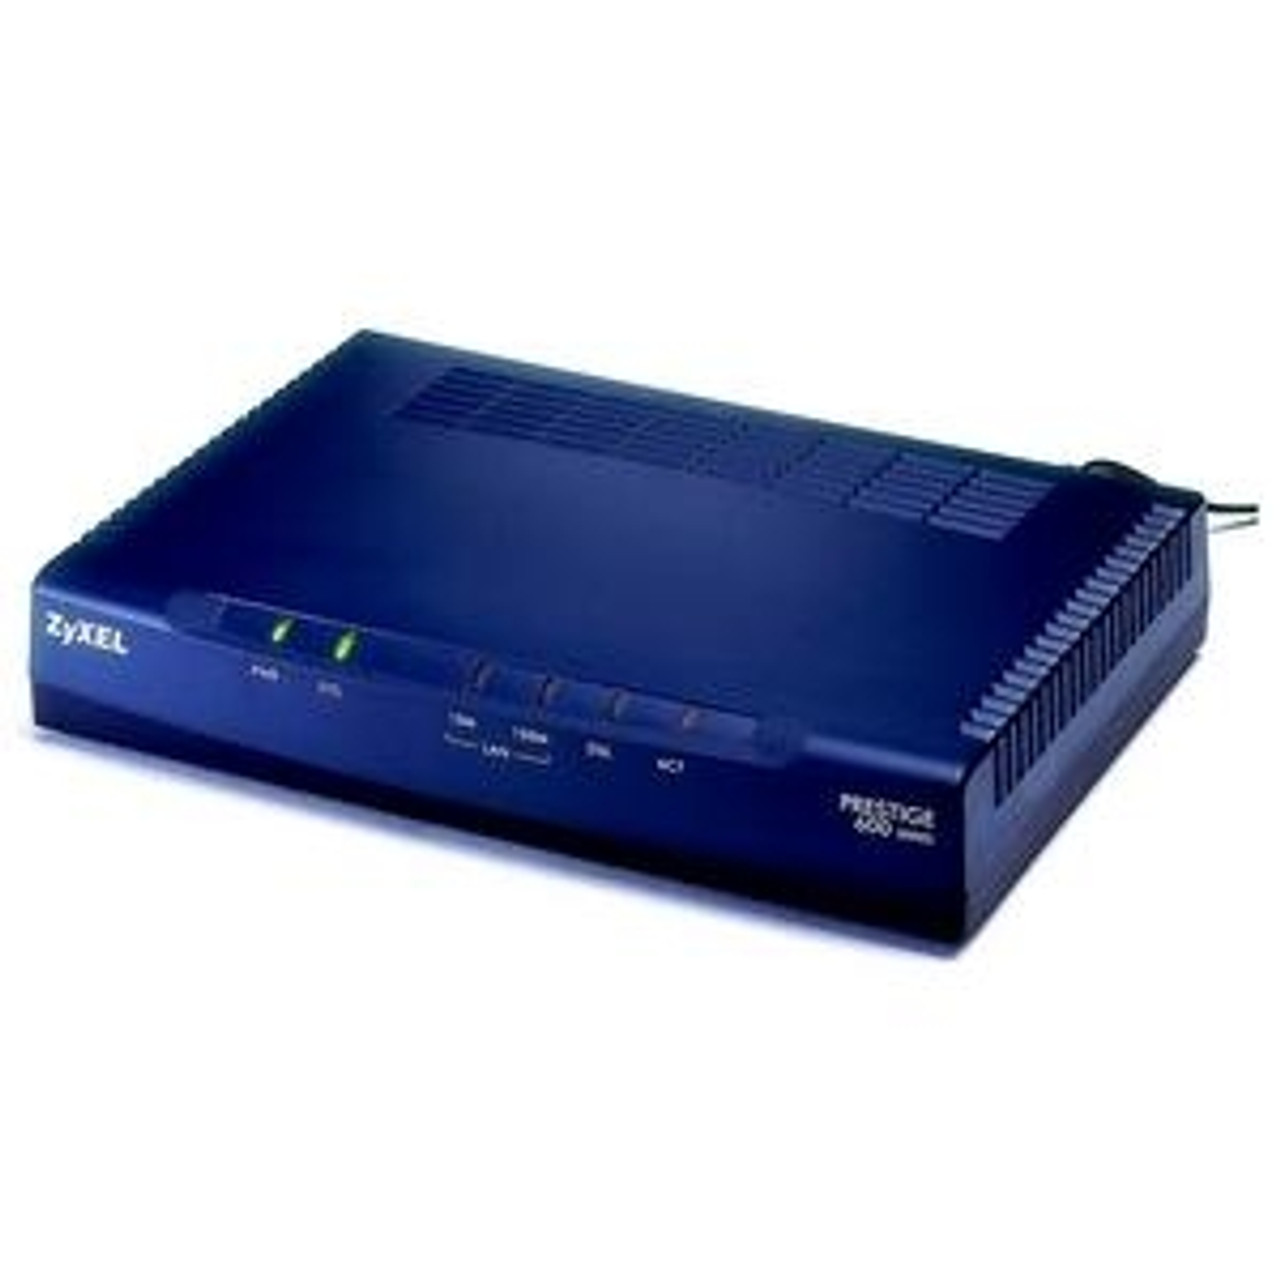 AM408200 Zyxel Prestige 643 Broadband Router (Refurbished)